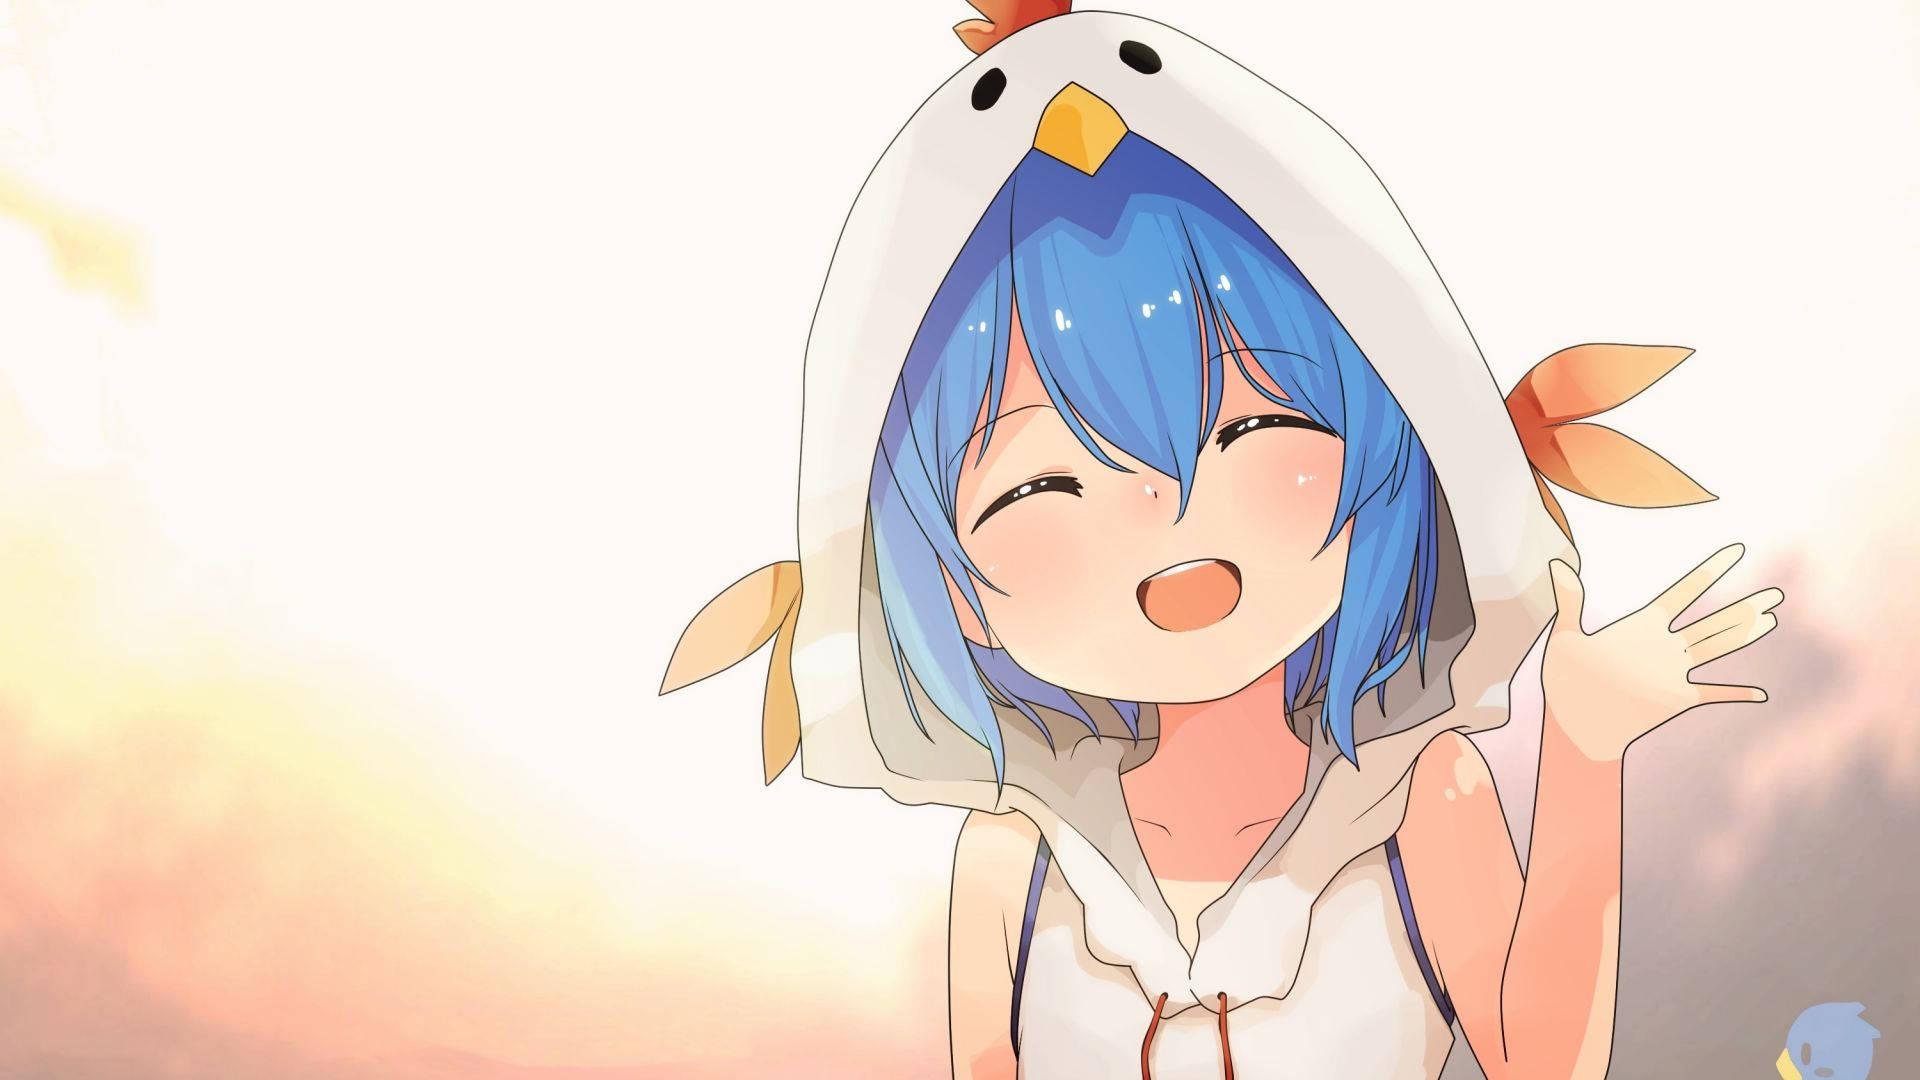 Chicken Anime Girl Hoodie Background